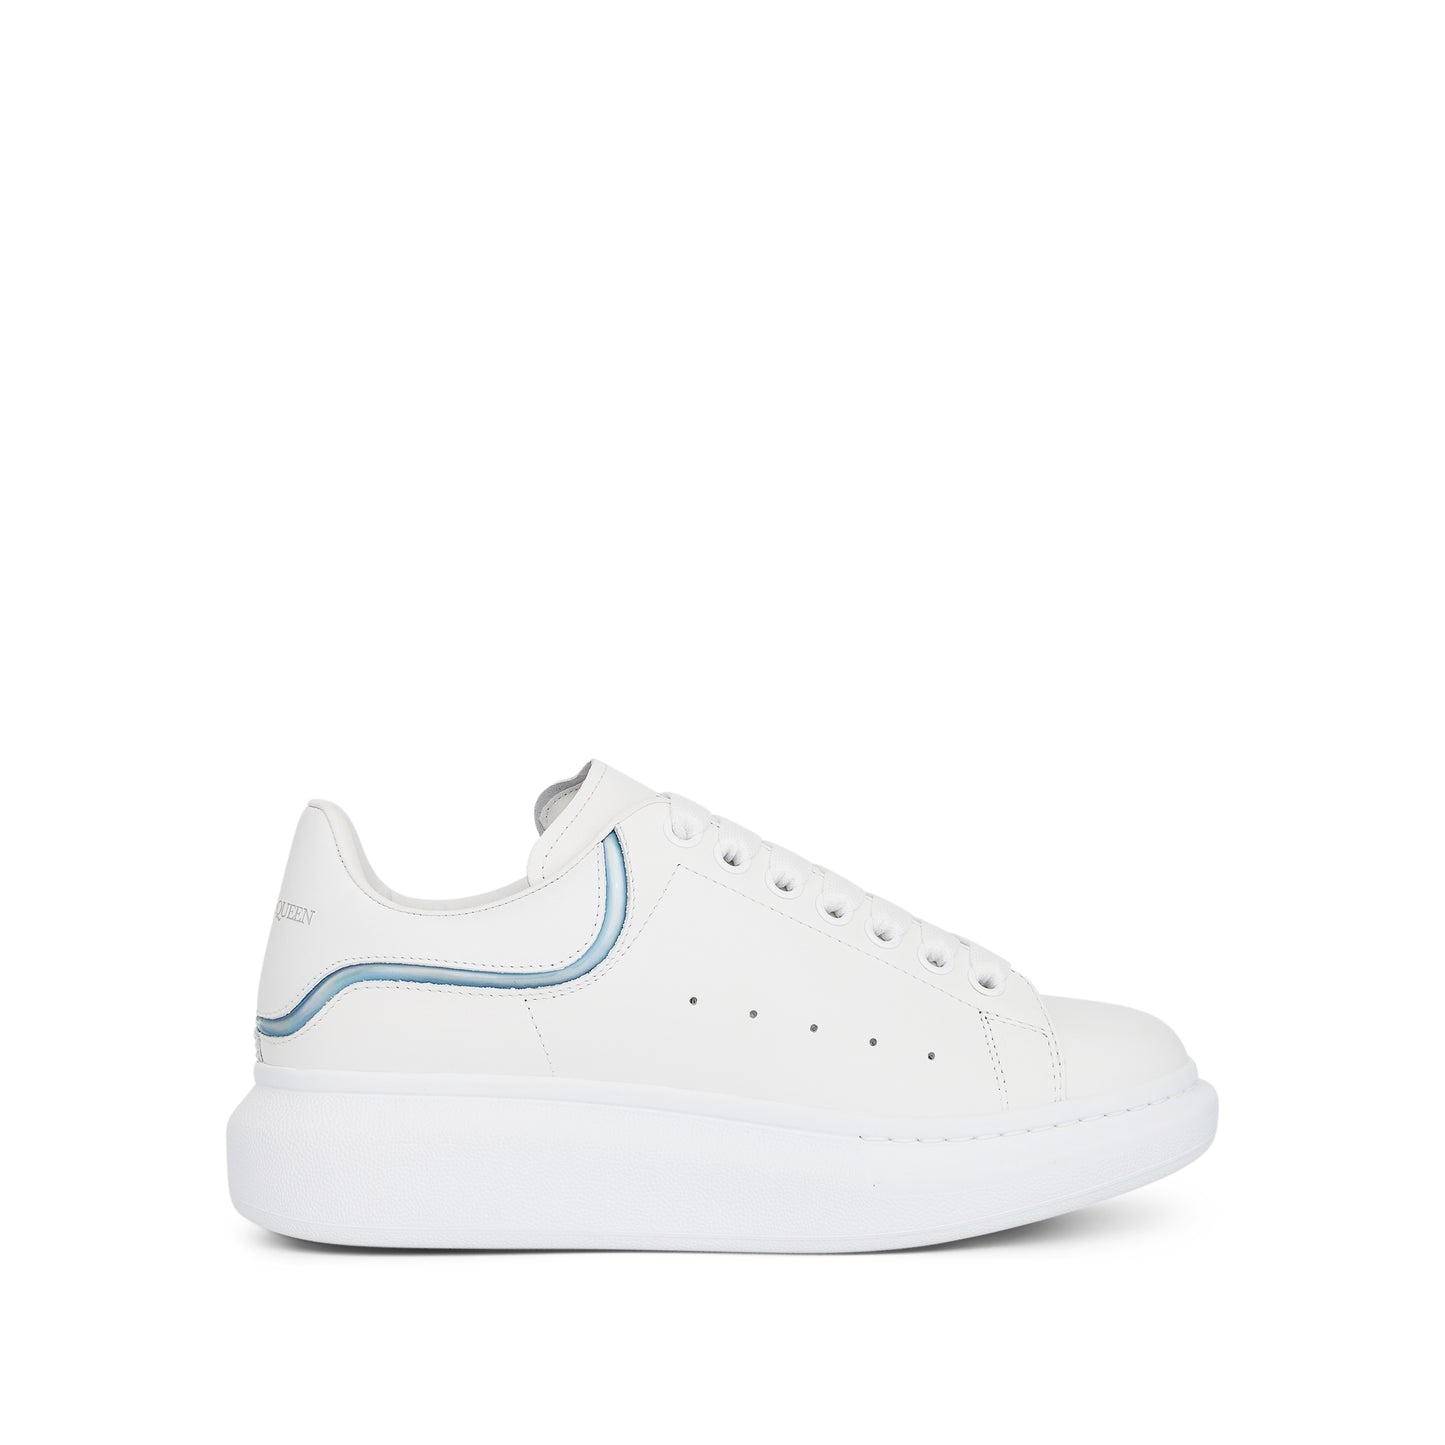 Larry Oversized Sneaker in White/Blue